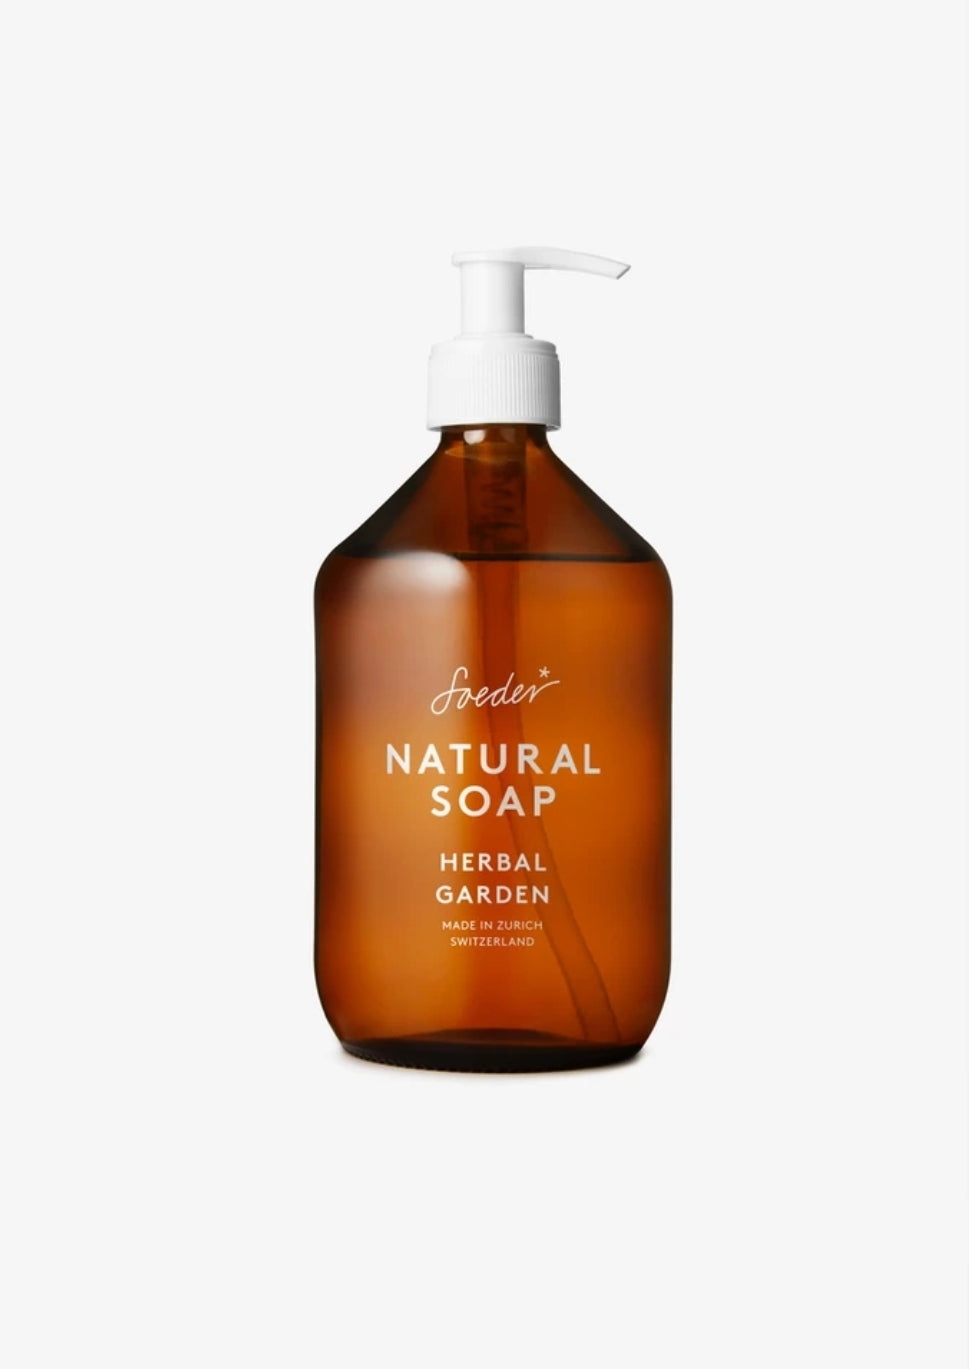 Natural Soap by Soeder